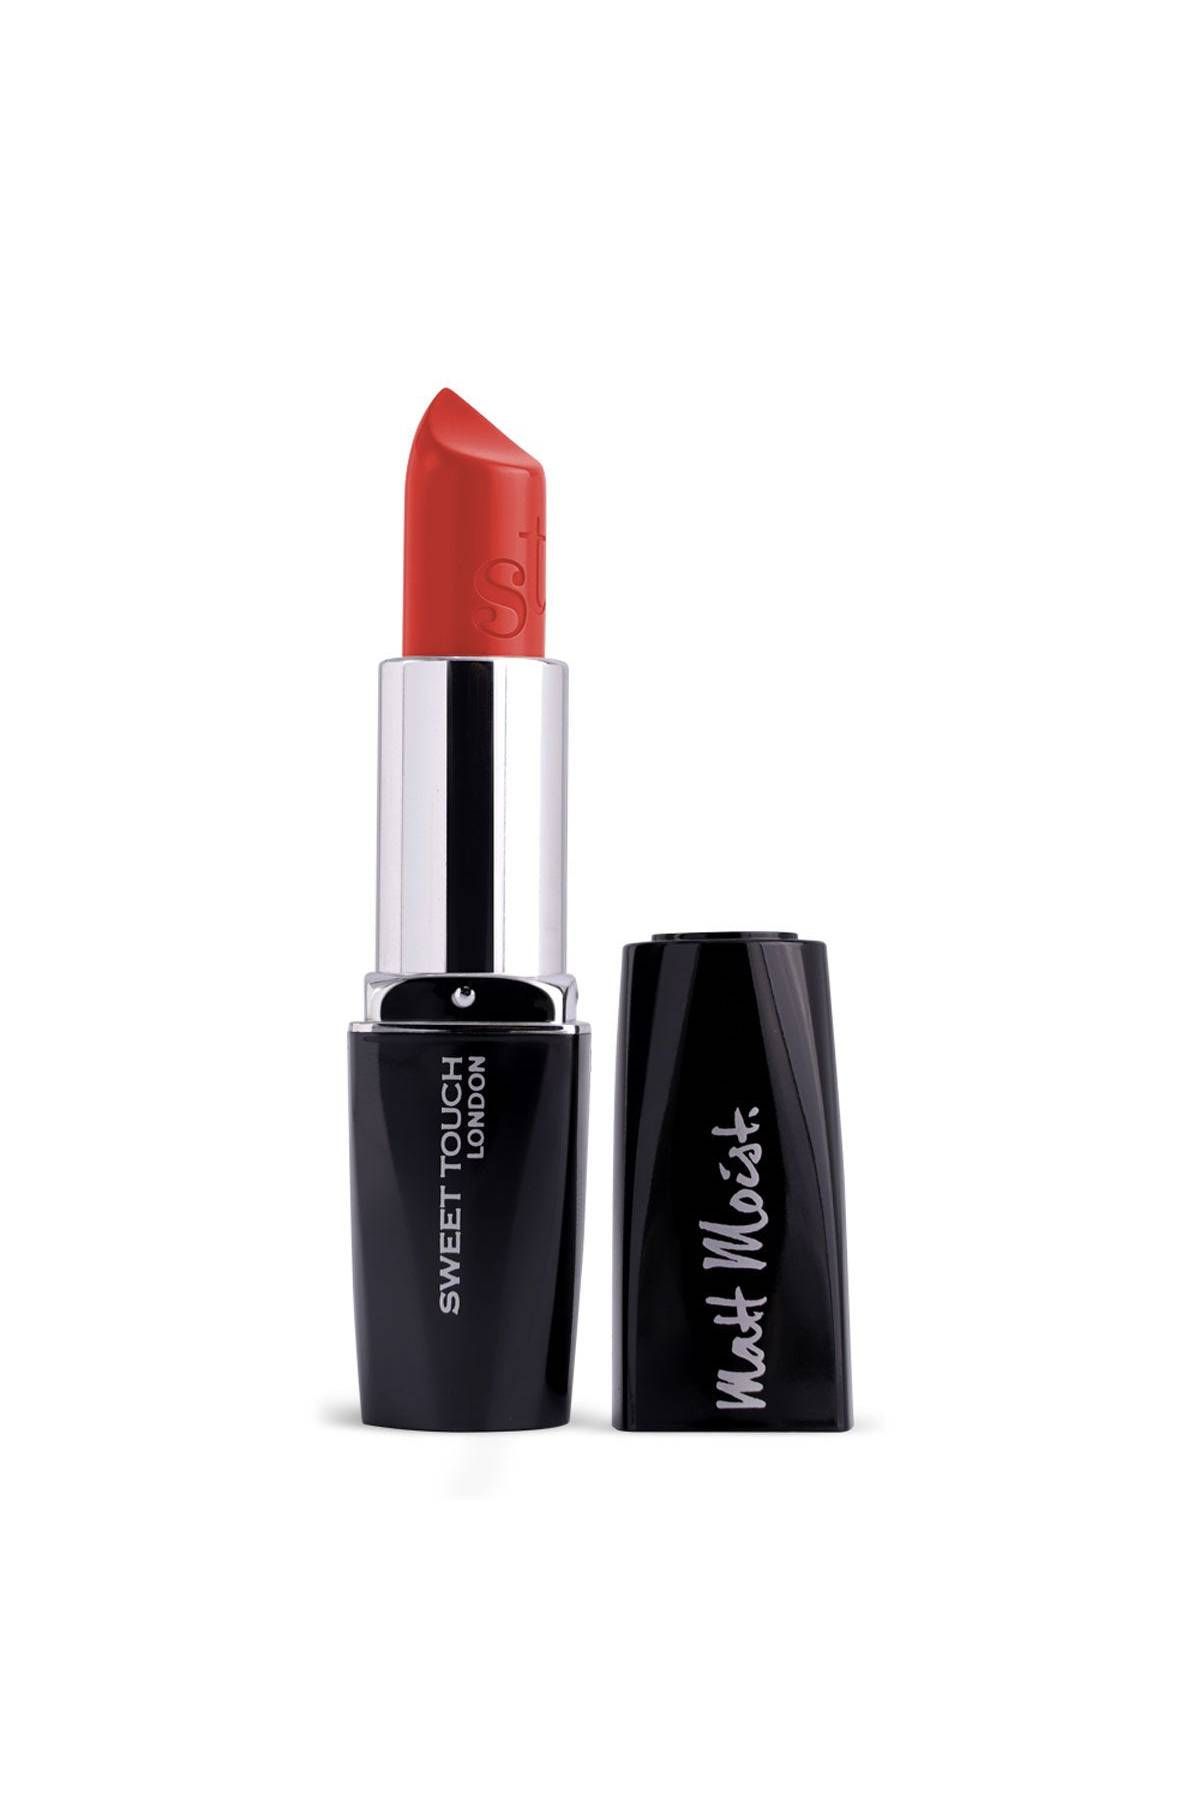 ST London - Matte Moist Lipstick -125 - Pink Coral